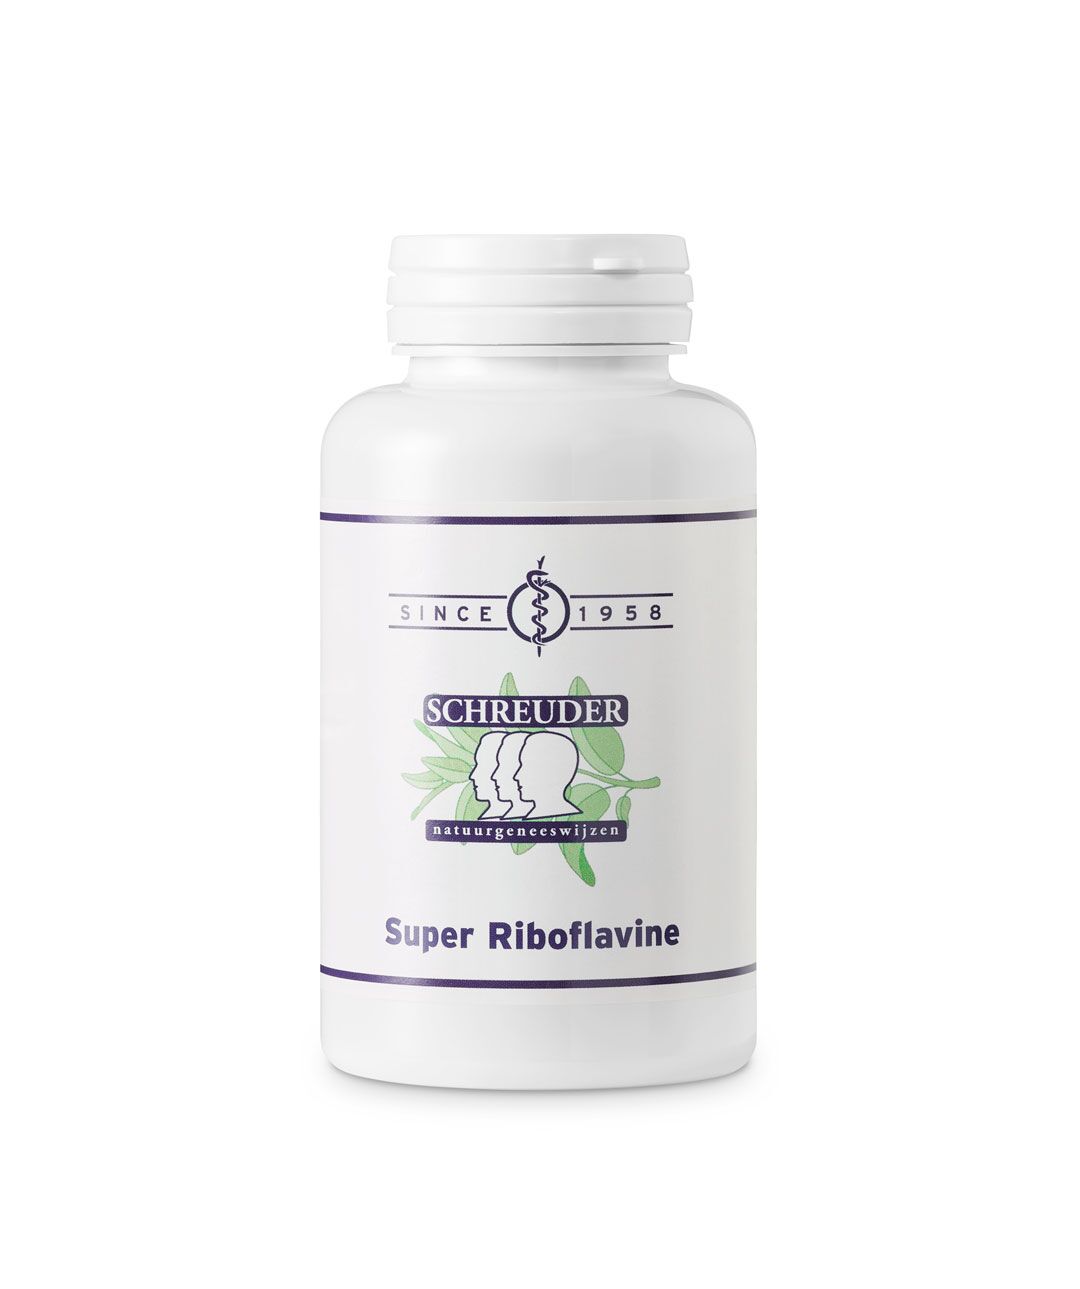 Super Riboflavine